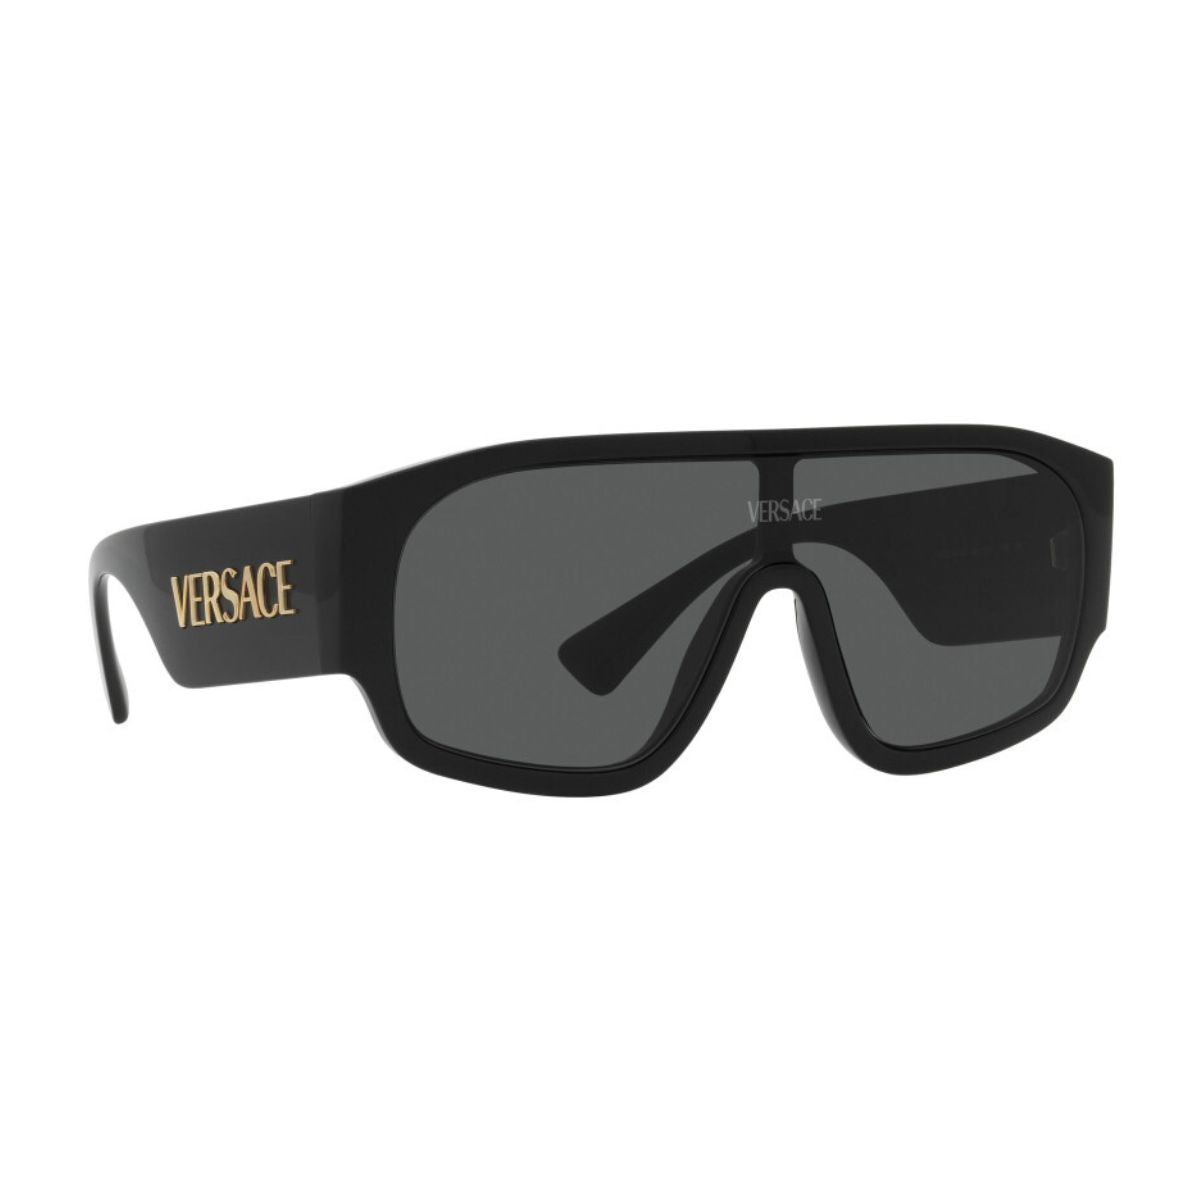 "Best Versace 4439 GB1/87 Men's and Women's Eyewear Sunglasses Online At Optorium"